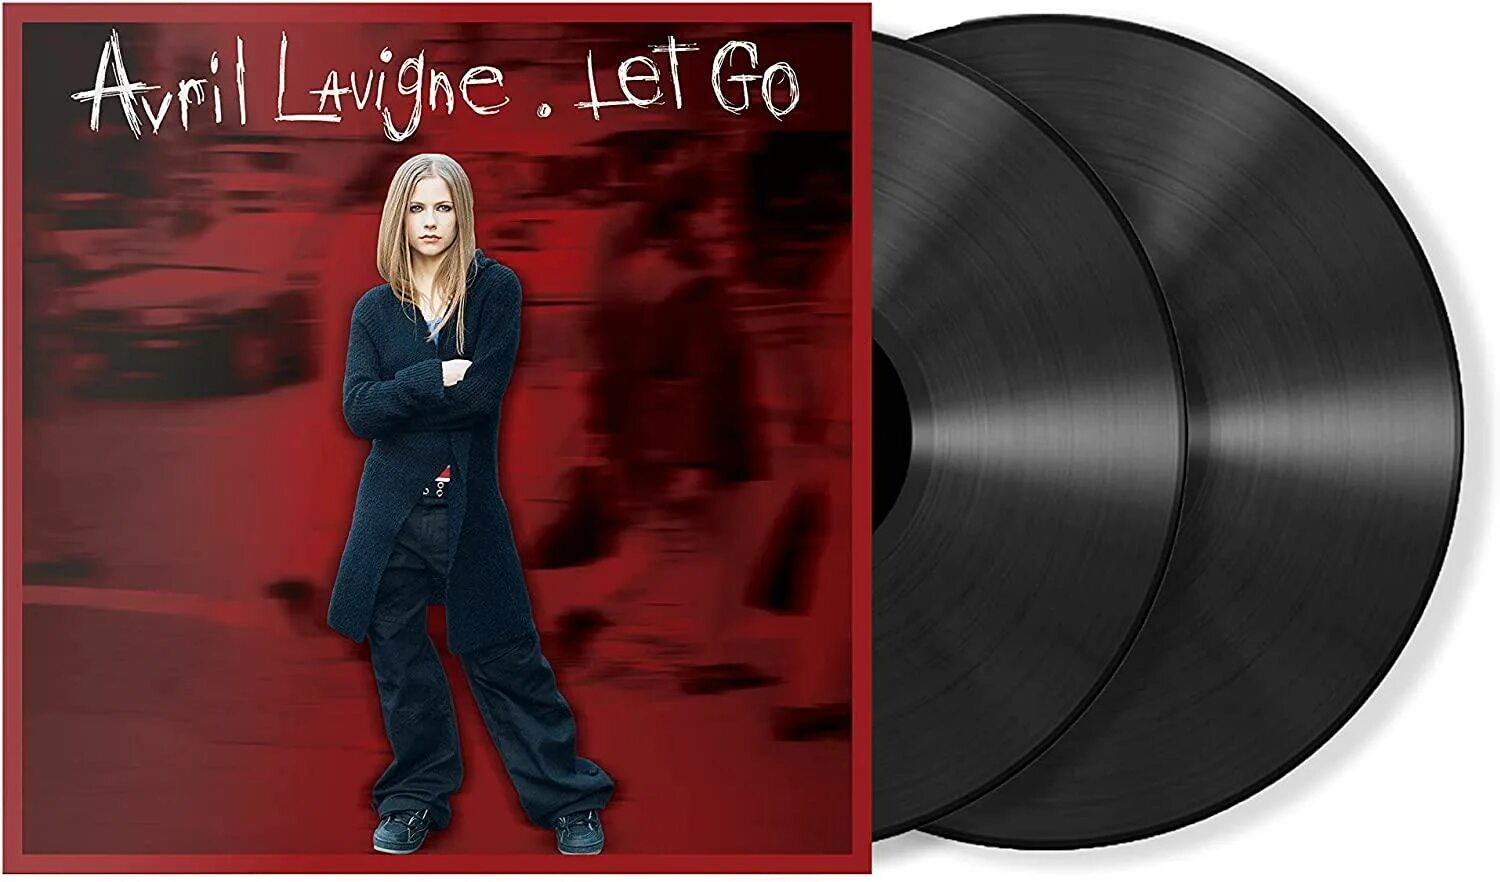 Avril lavigne let go. Avril Lavigne Love sucks. 25 Anniversary LP. Купить пластинку Аврил Лавин Let go.